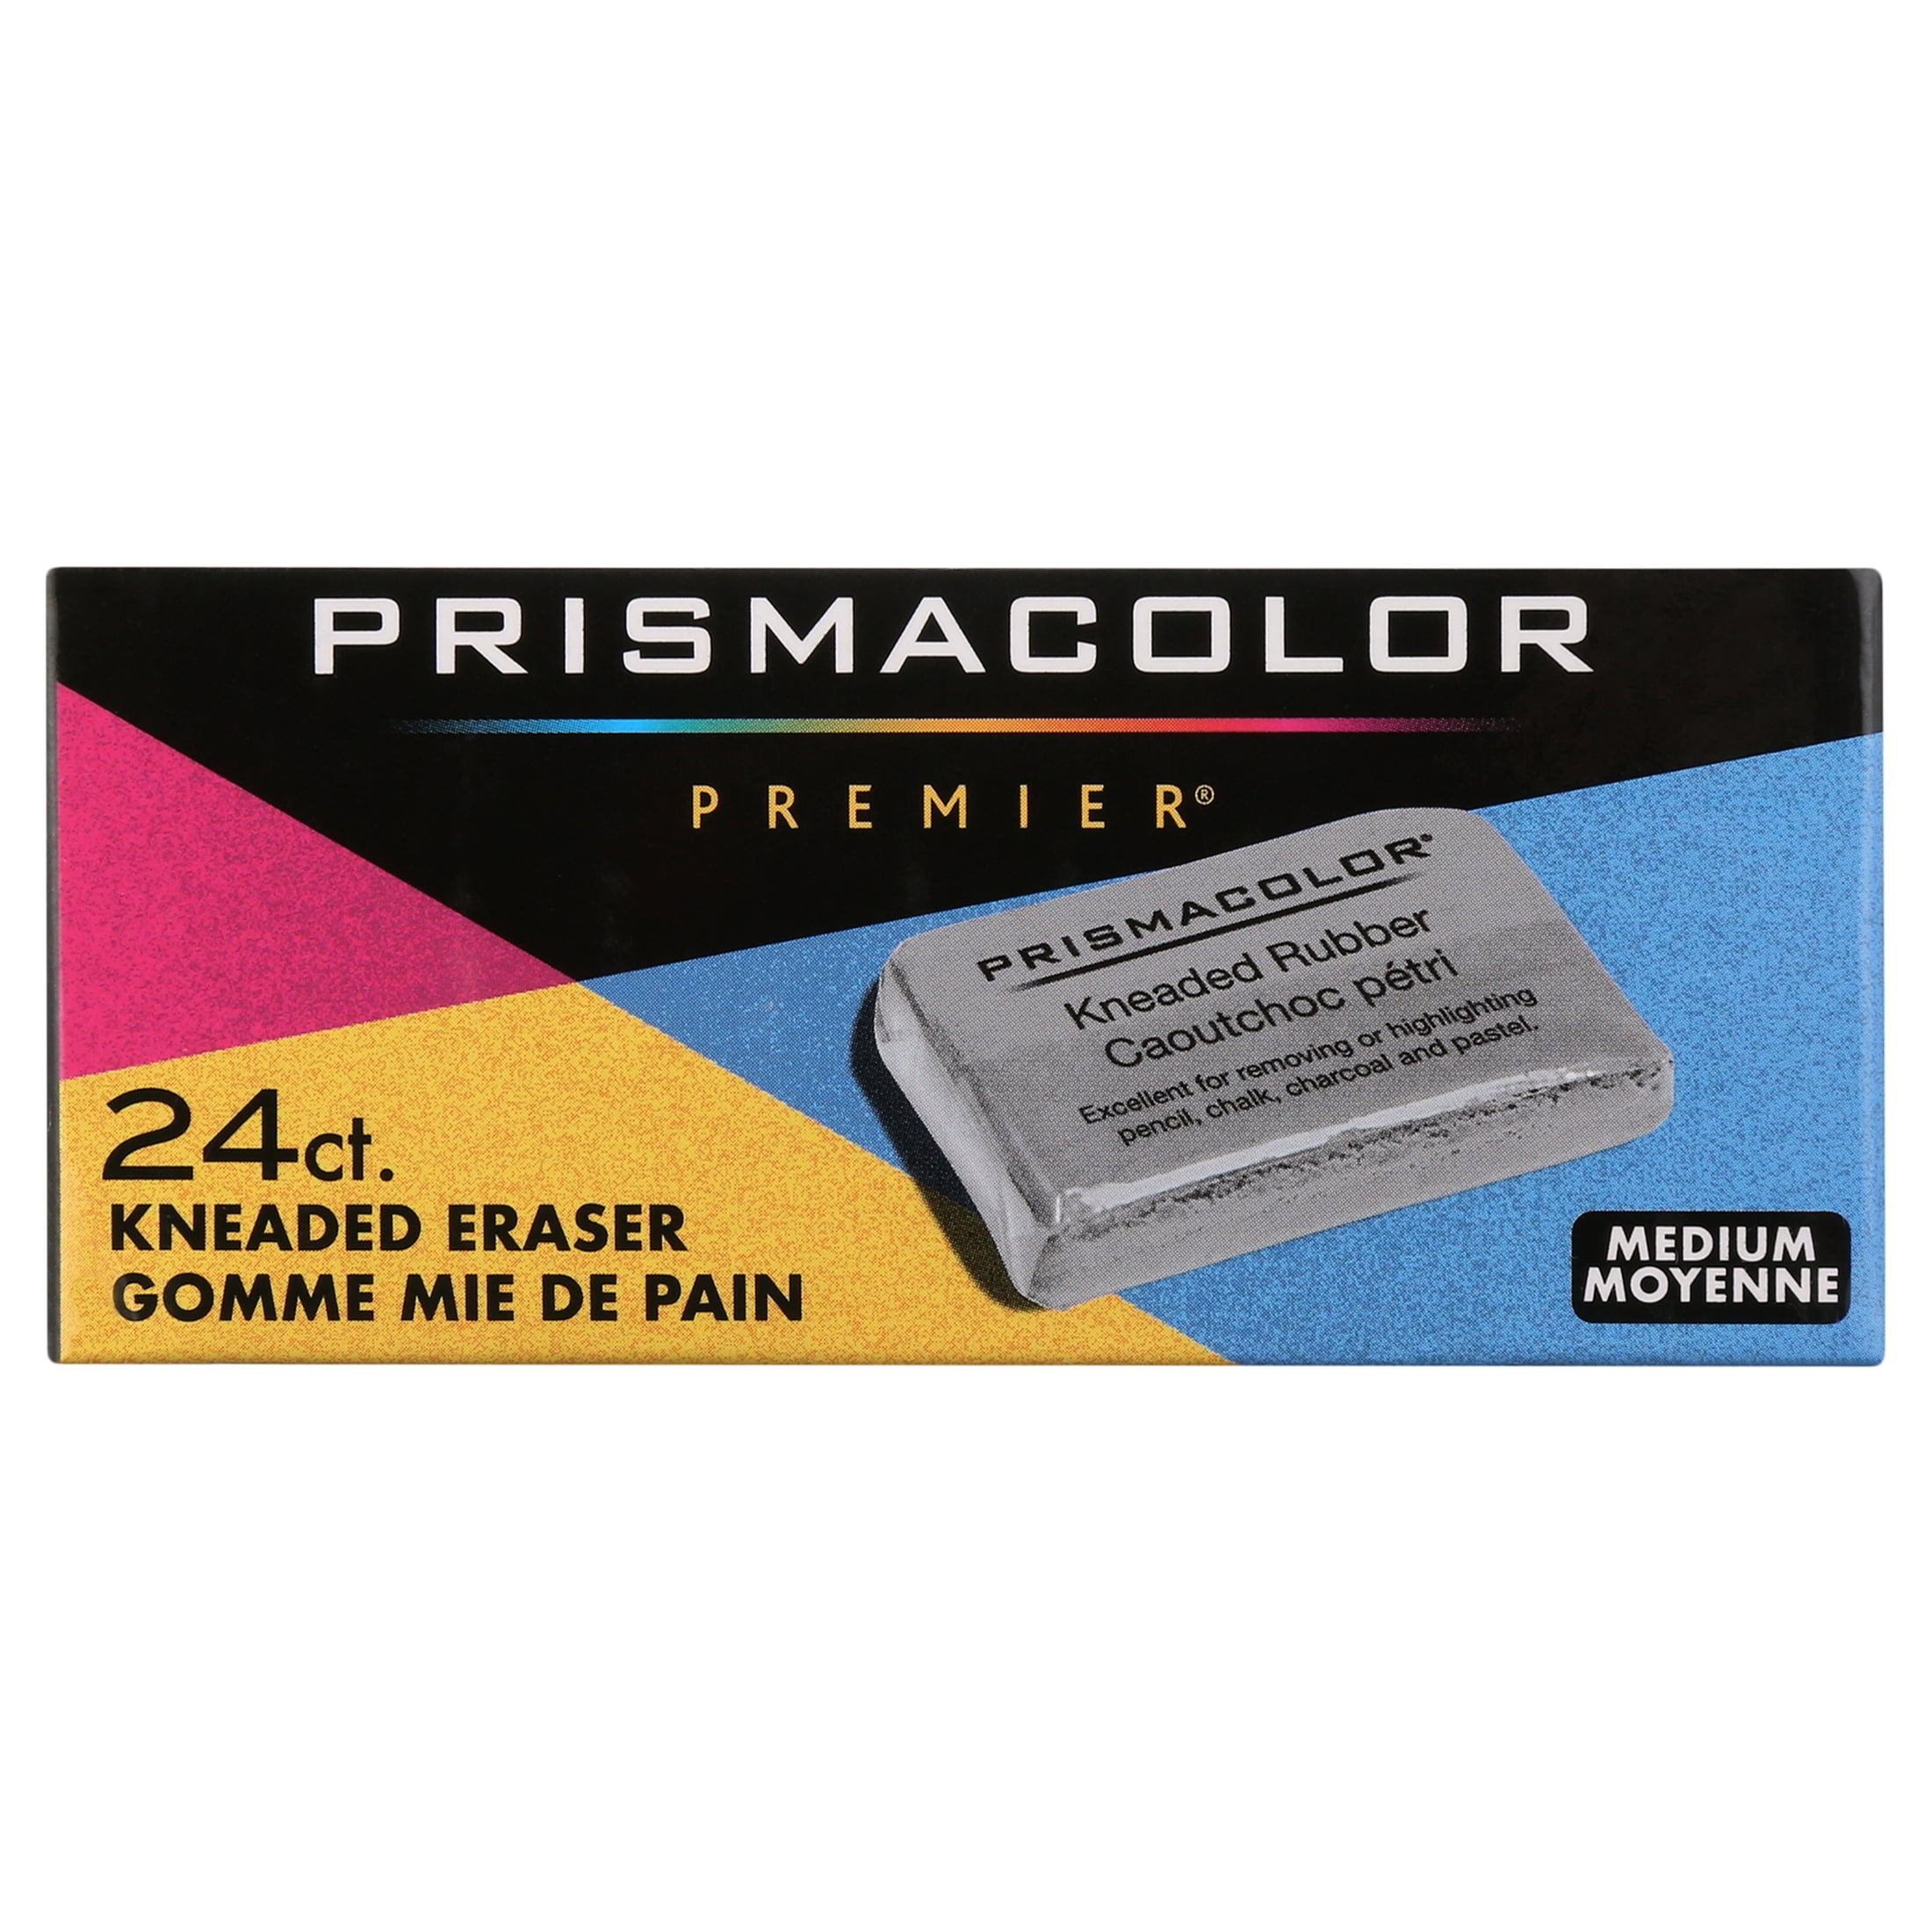 Review – Prismacolor Kneaded Rubber Eraser